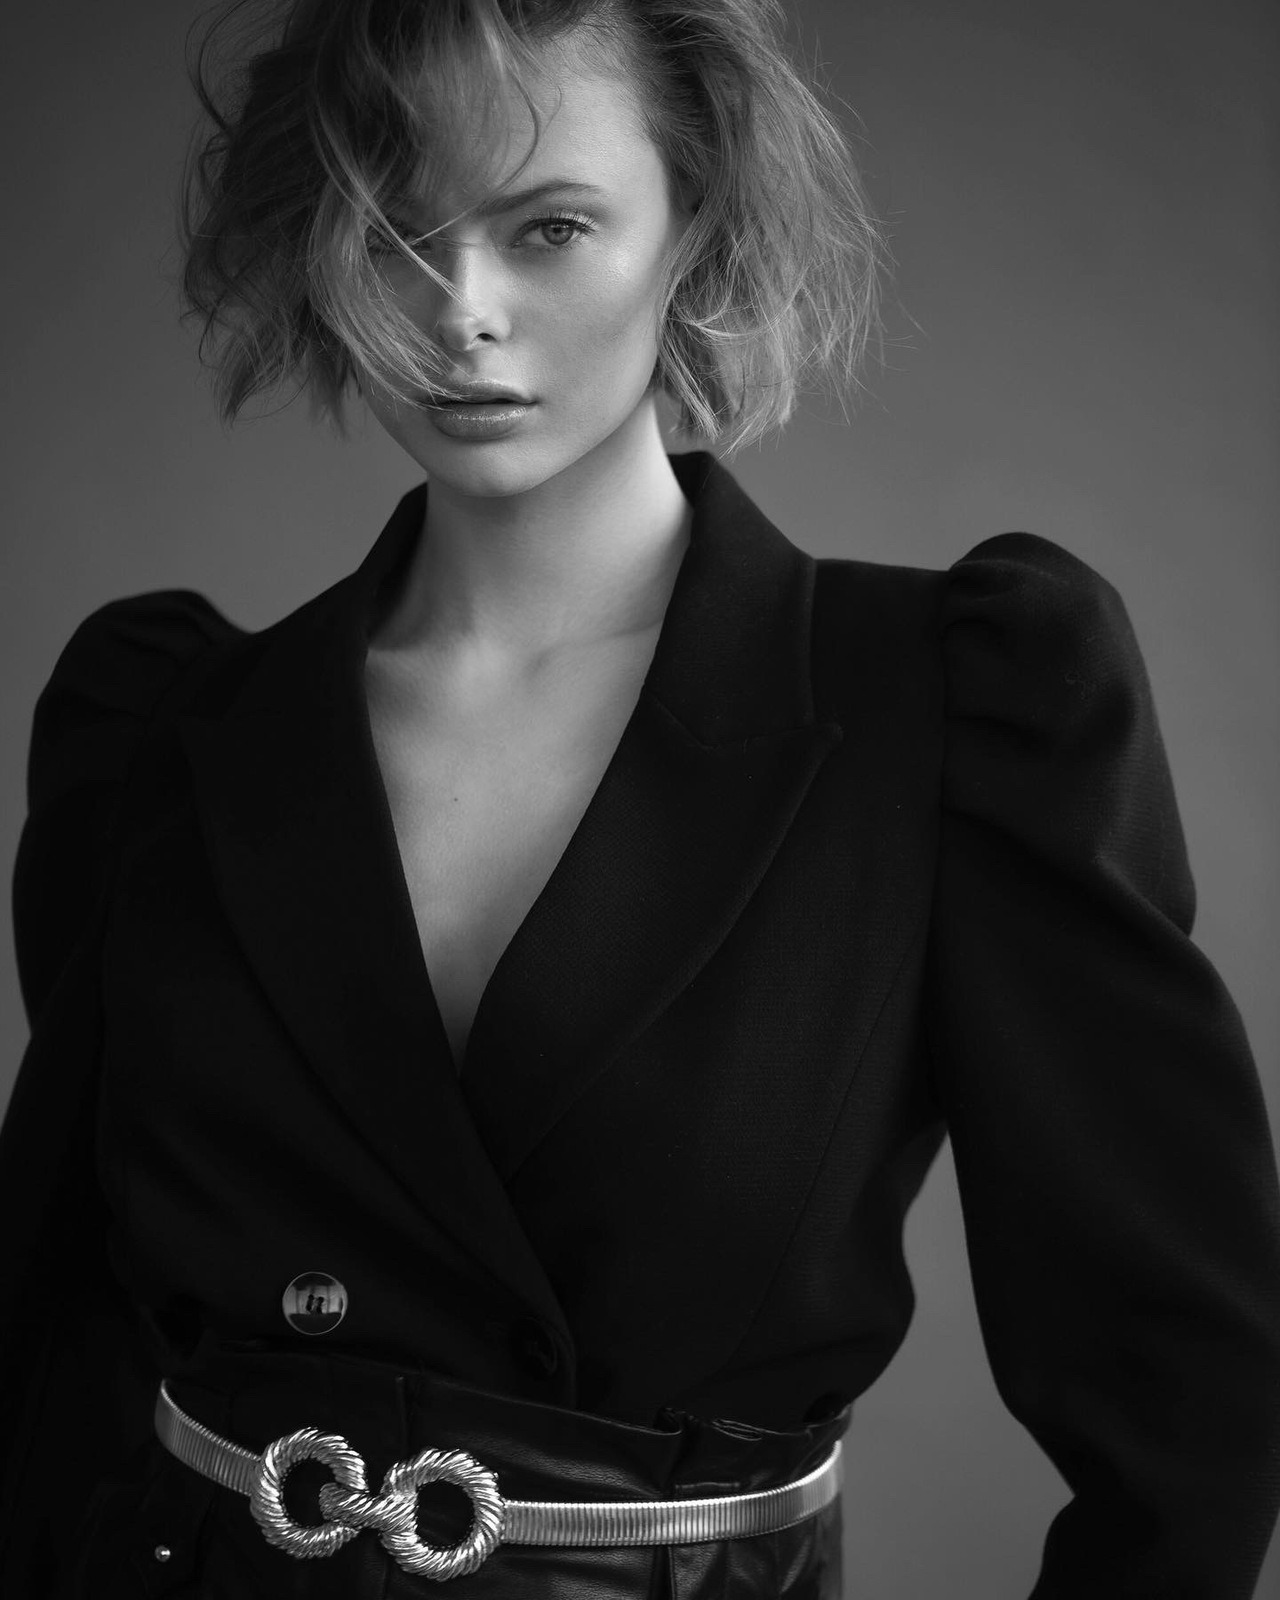 Alexandra australia/s next top model